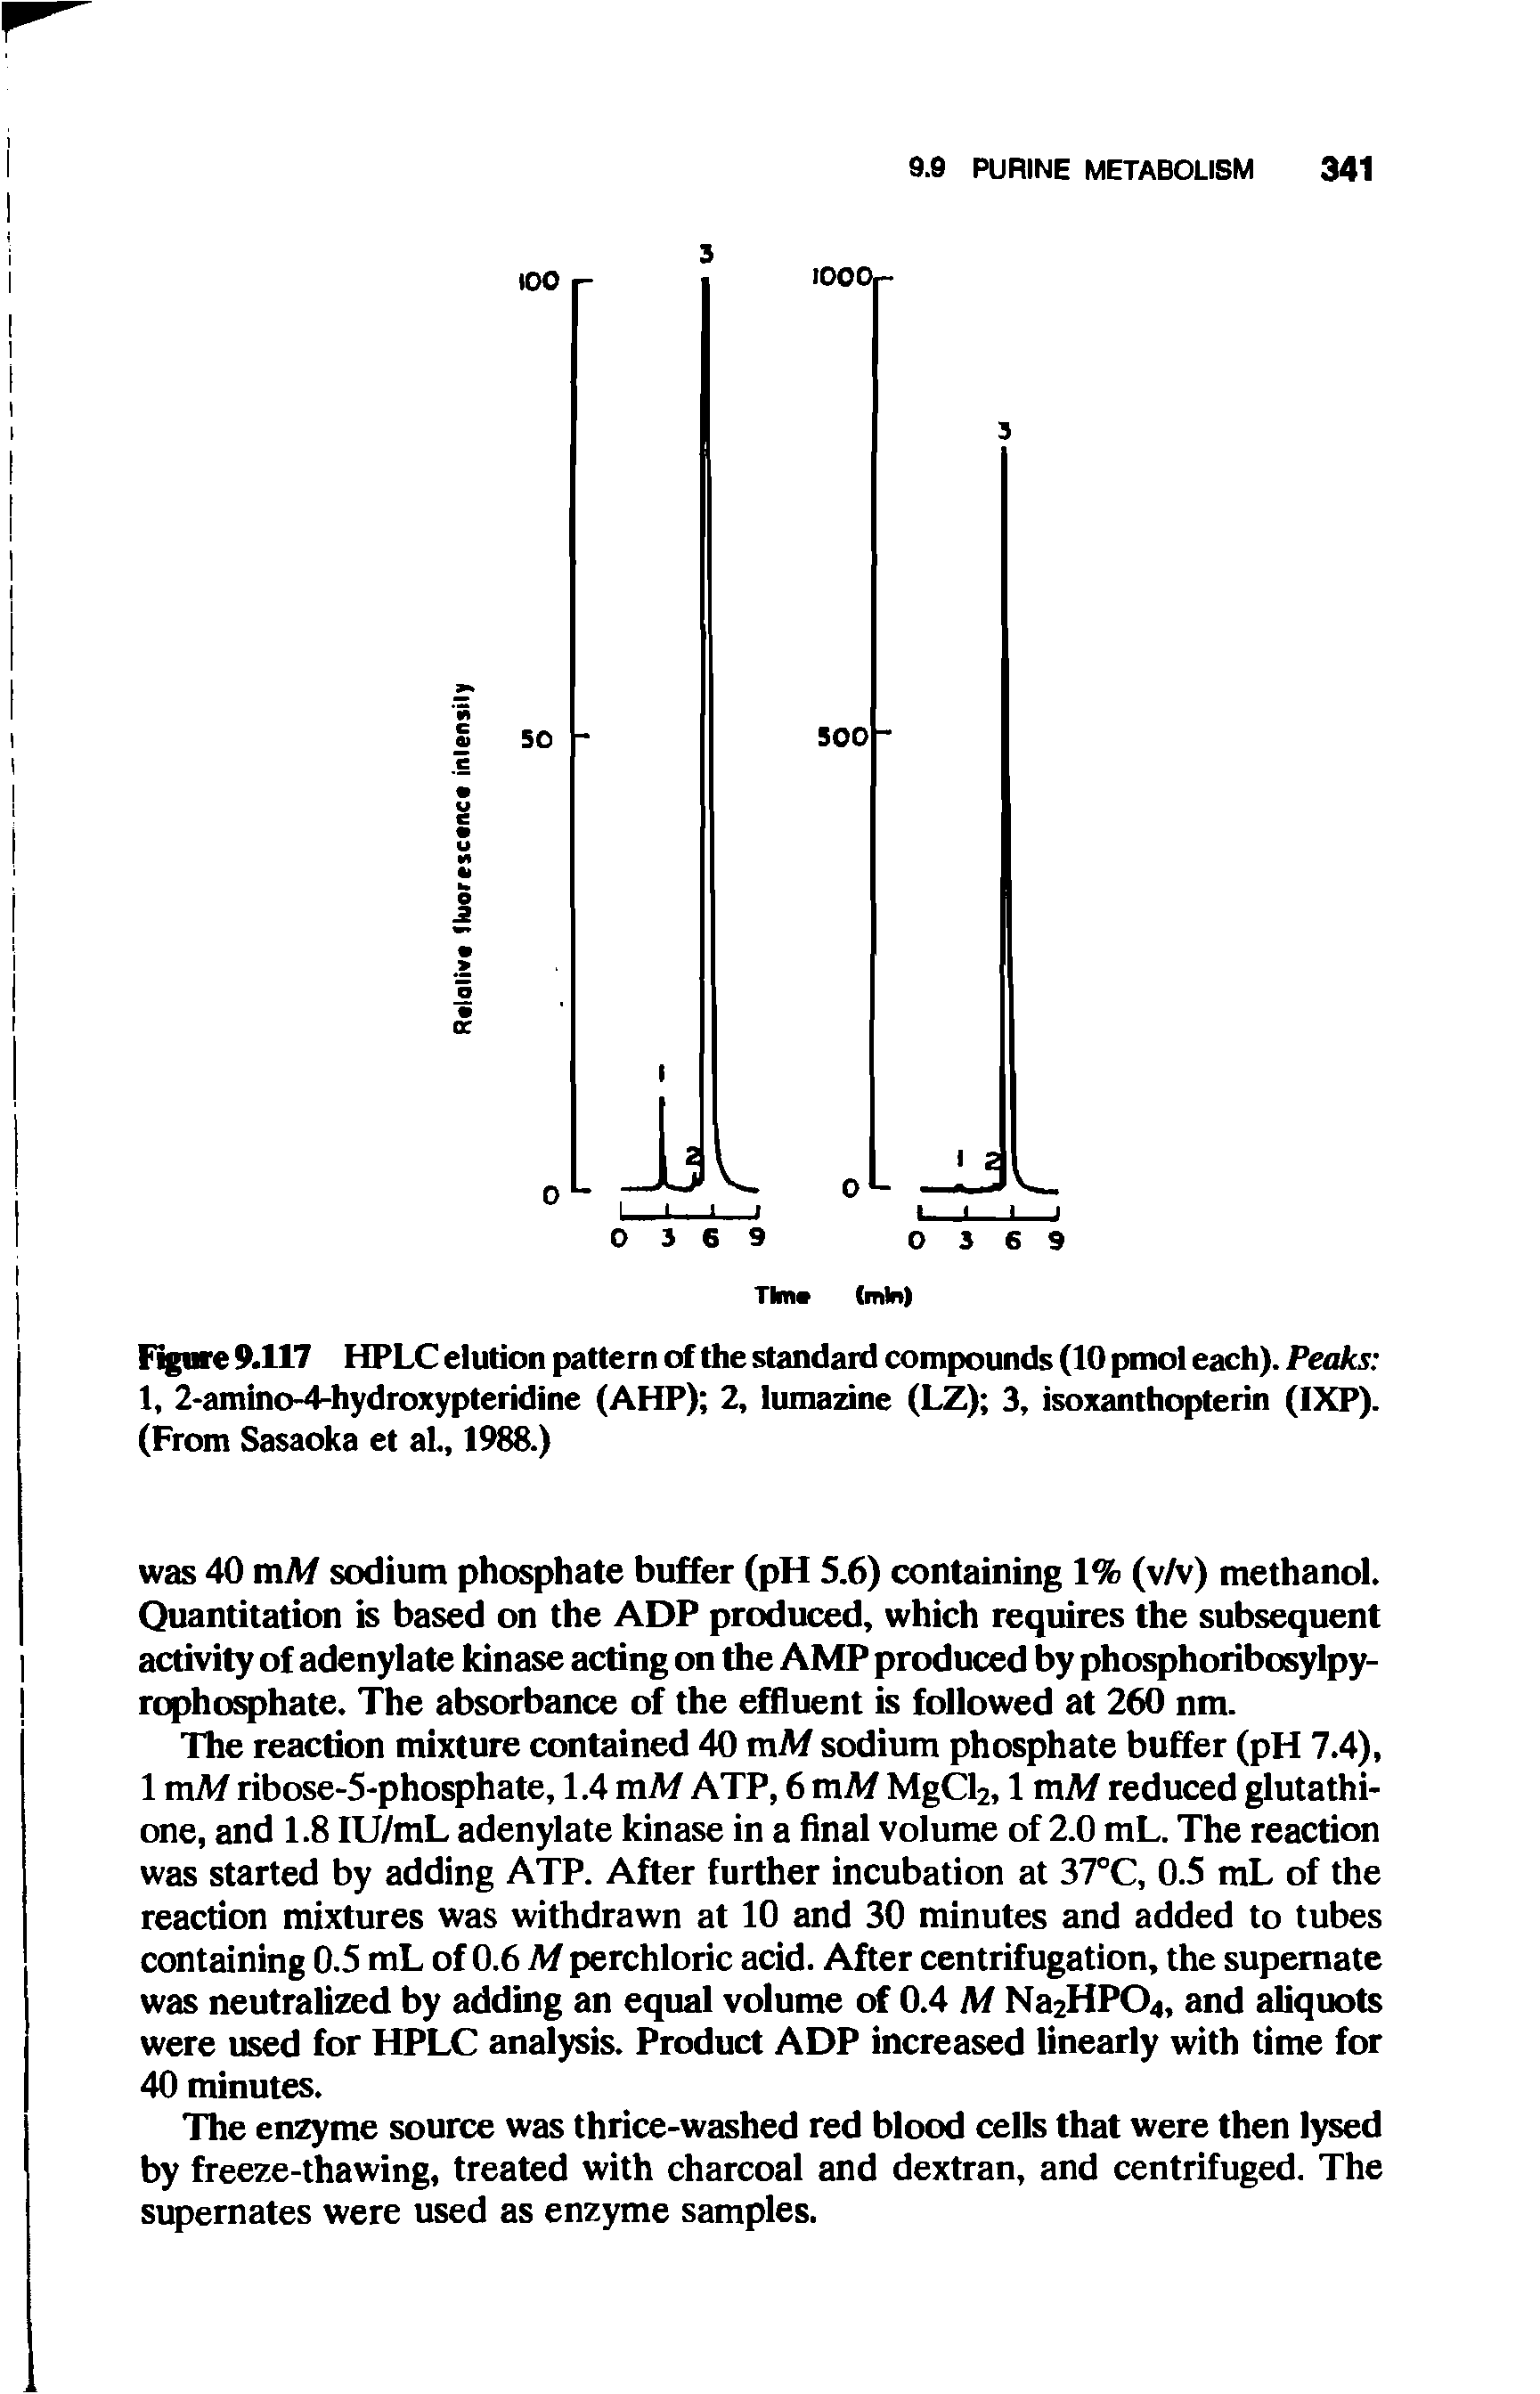 Figure 9.117 HPLC elution pattern of the standard compounds (10 pmol each). Peaks 1, 2-amino-4-hydroxypteridine (AHP) 2, lumazine (LZ) 3, isoxanthopterin (IXP). (From Sasaoka et al., 1988.)...